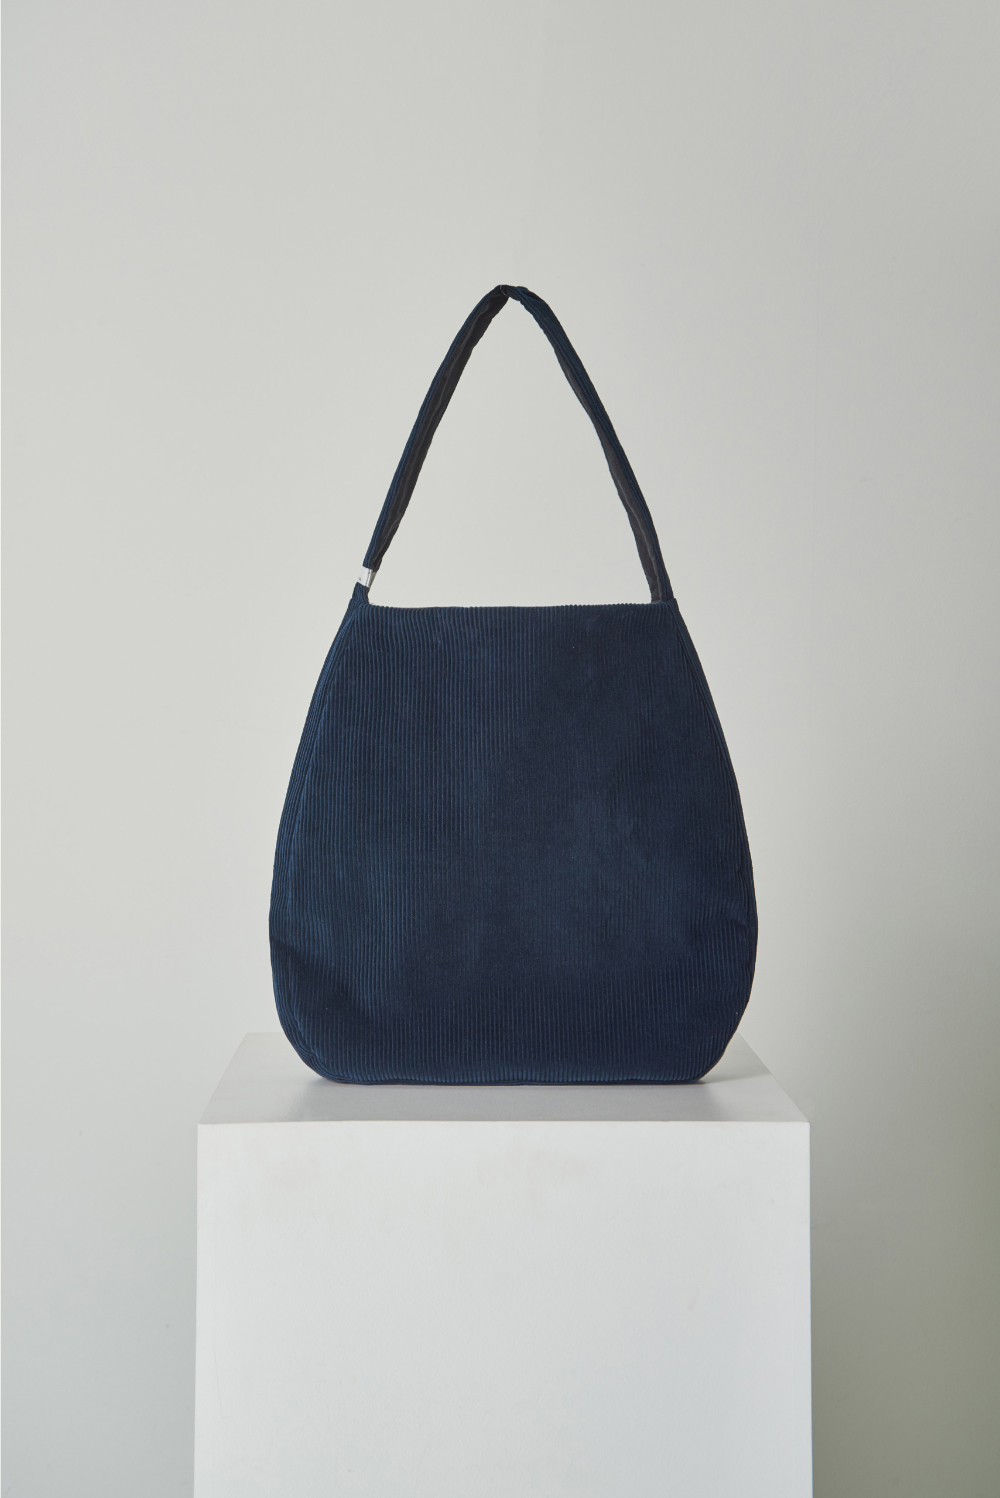 bag navy blue color image-S3L4